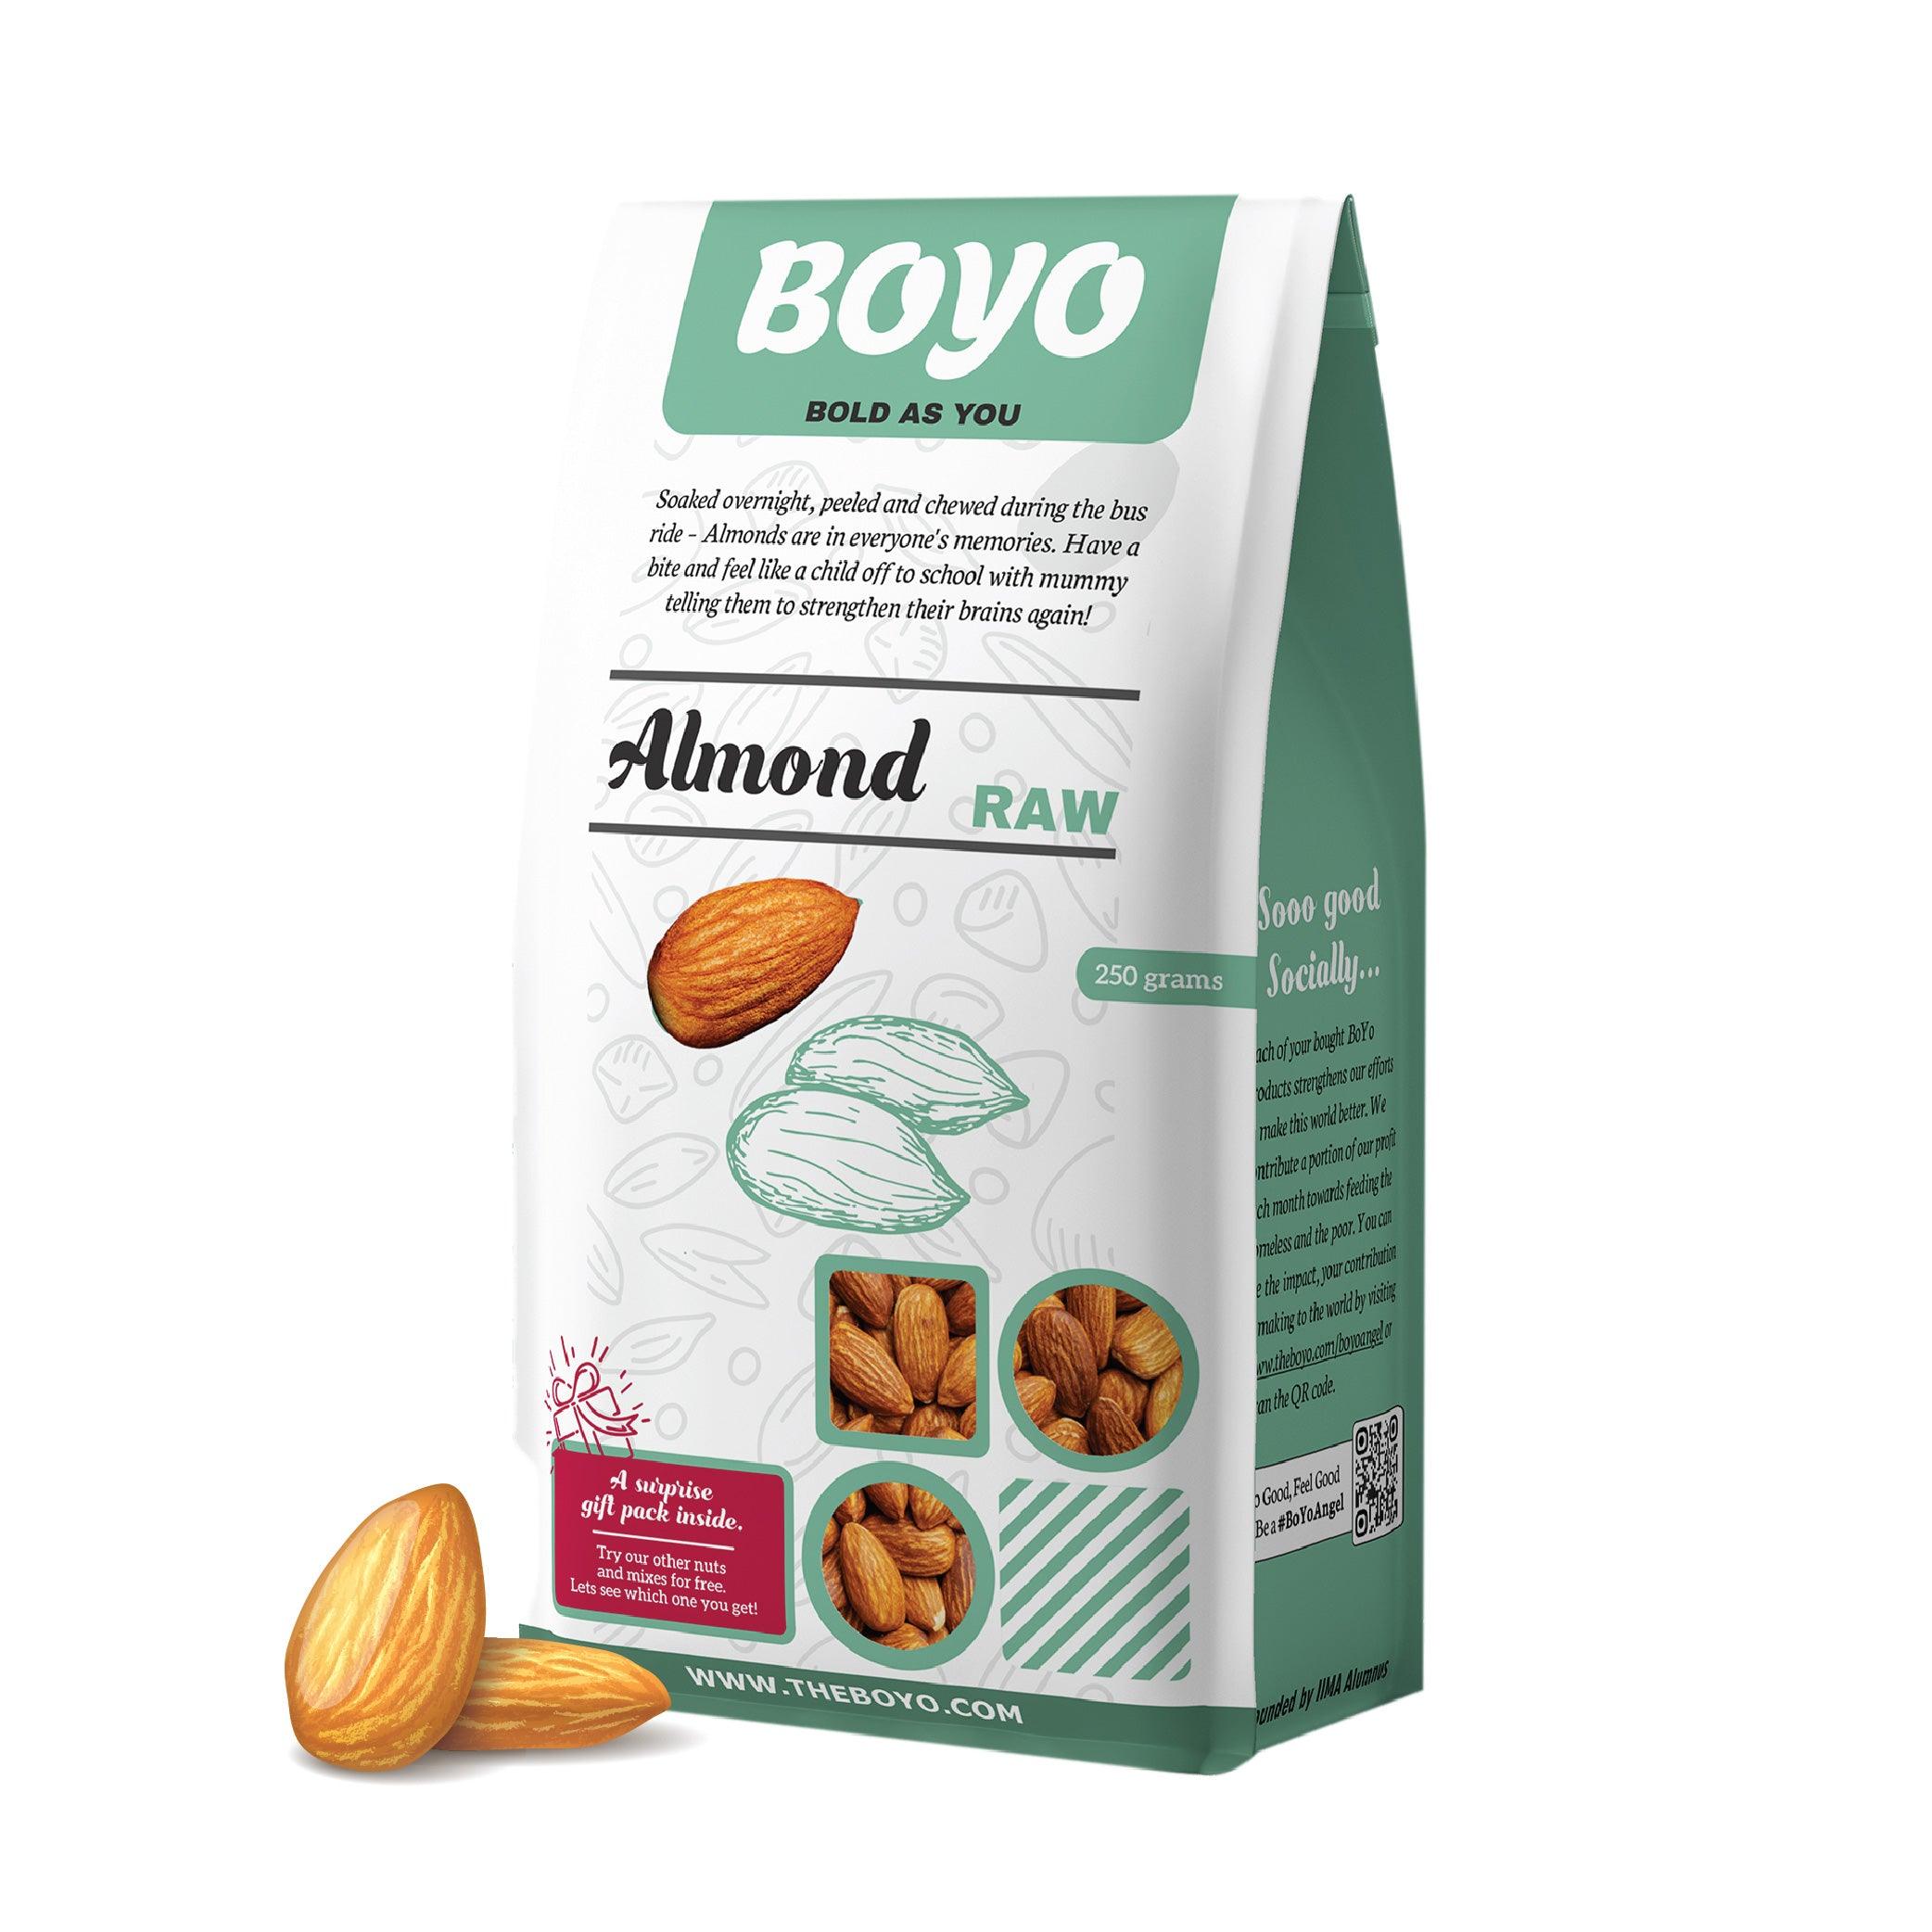 Premium California Almond (24 Units) - BoYo